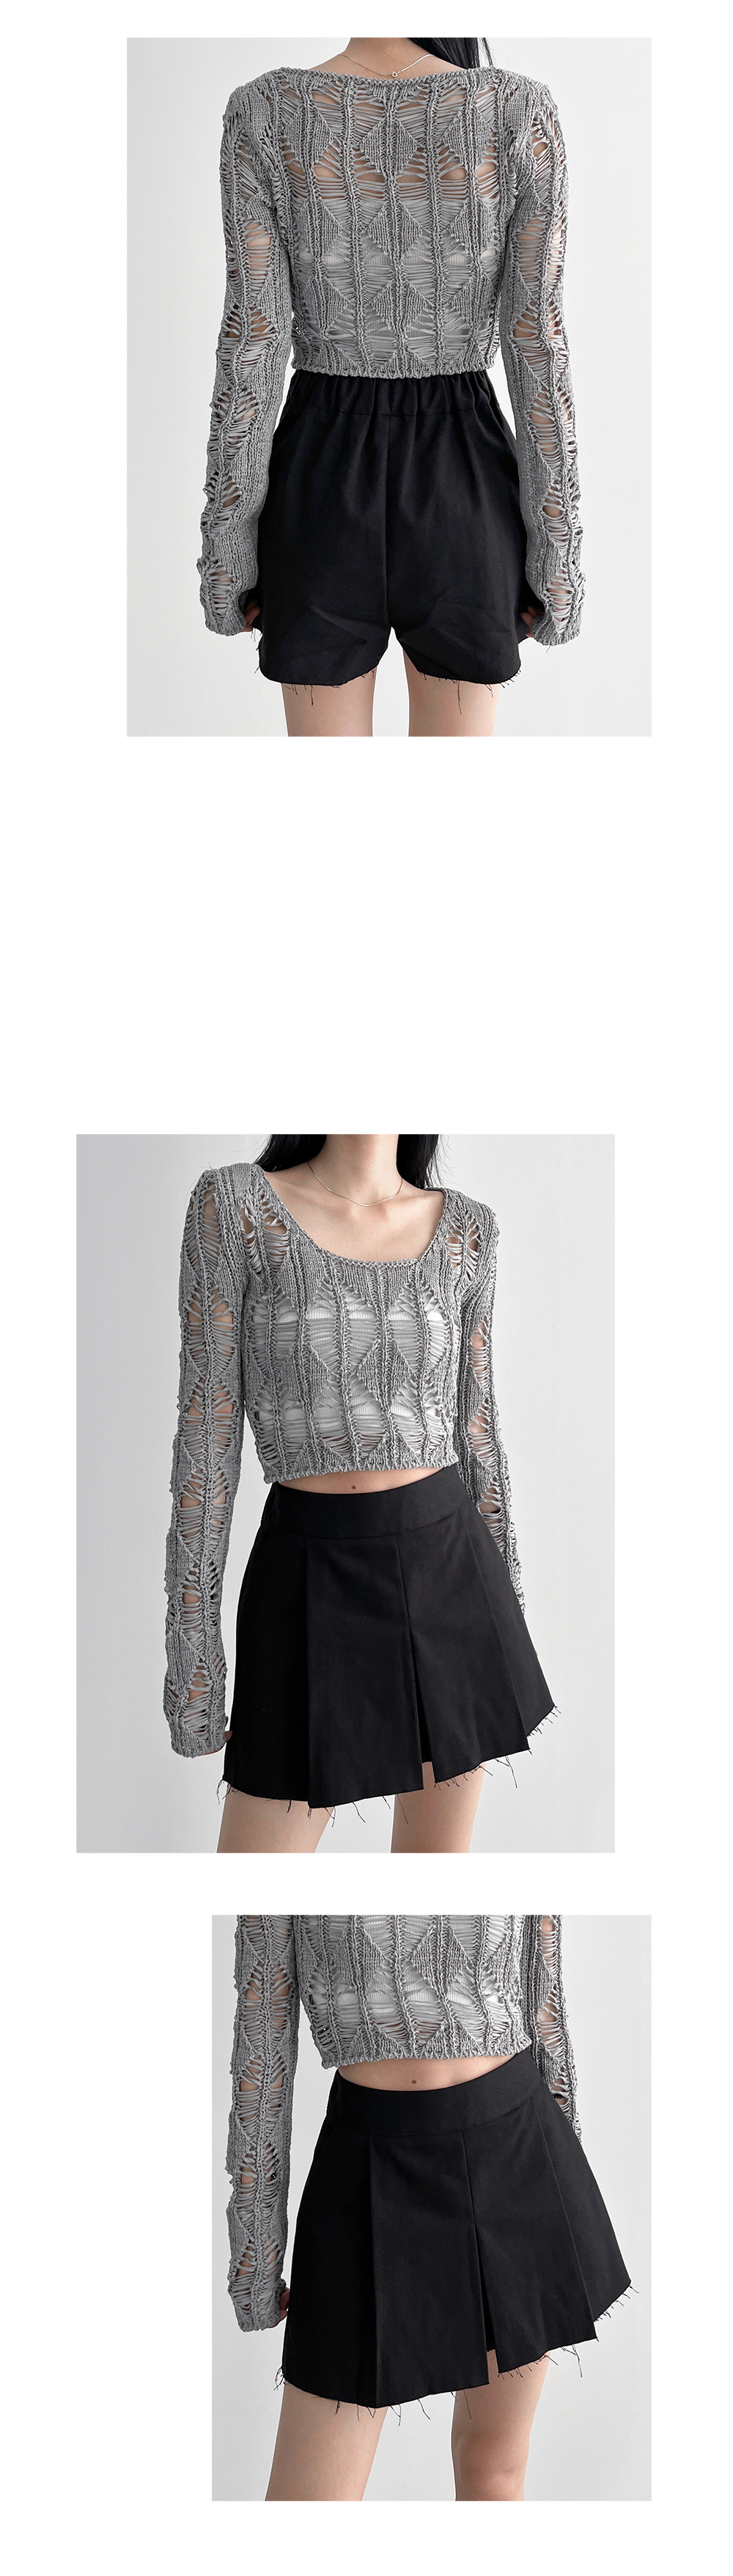 mini skirt charcoal color image-S1L10